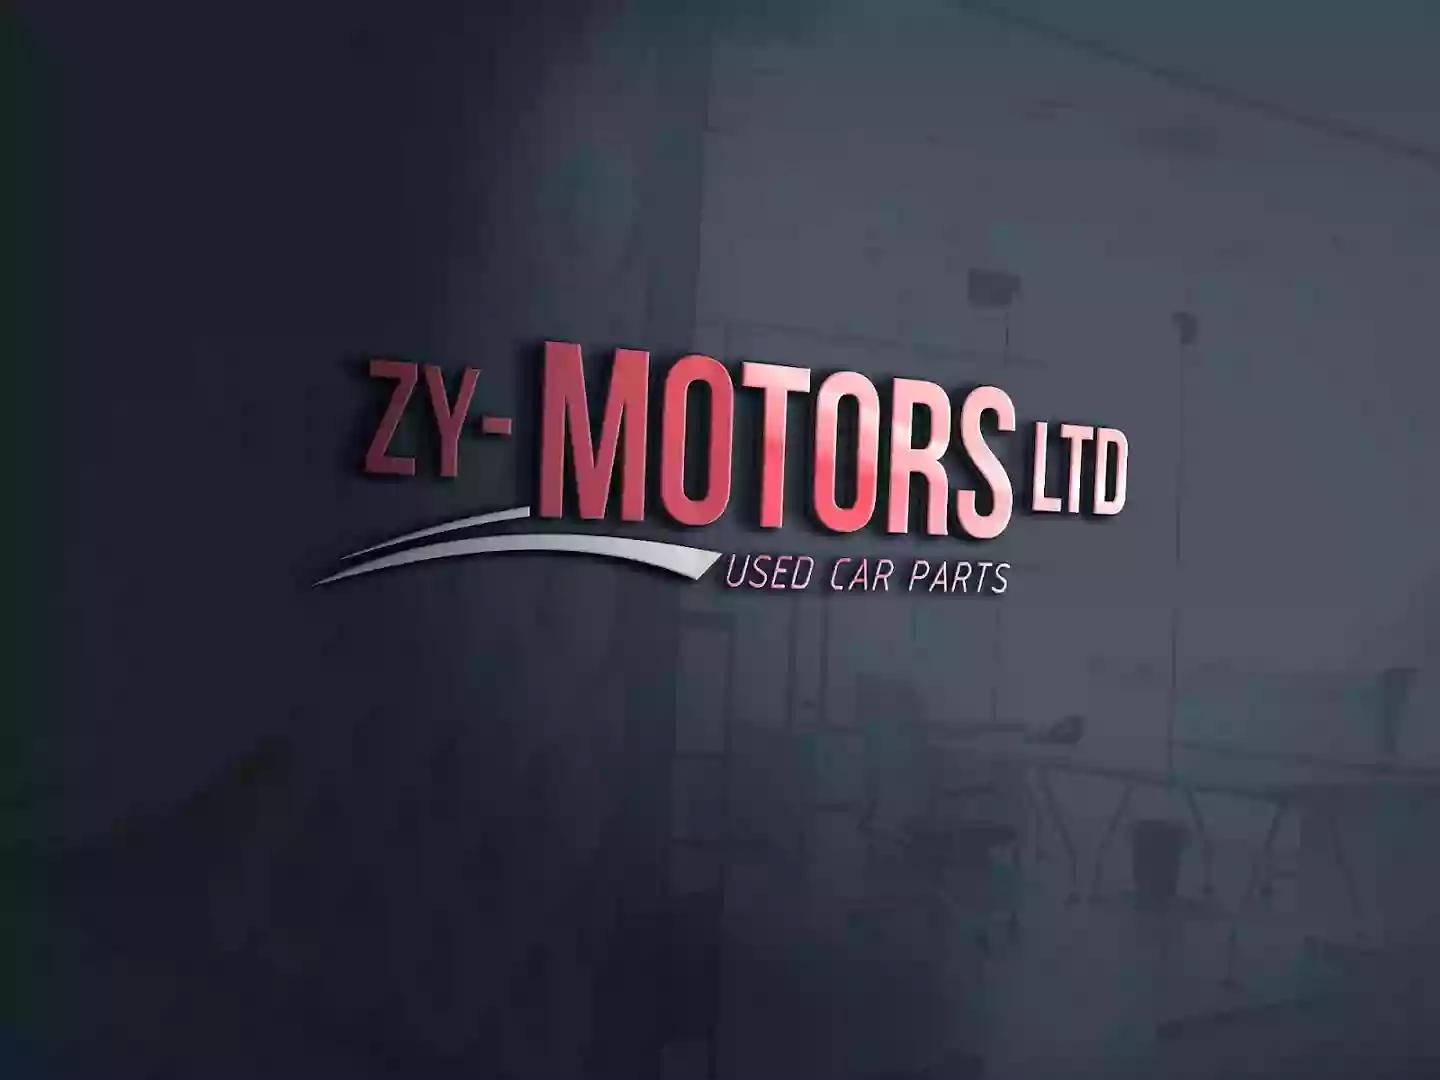 zy-motors ltd